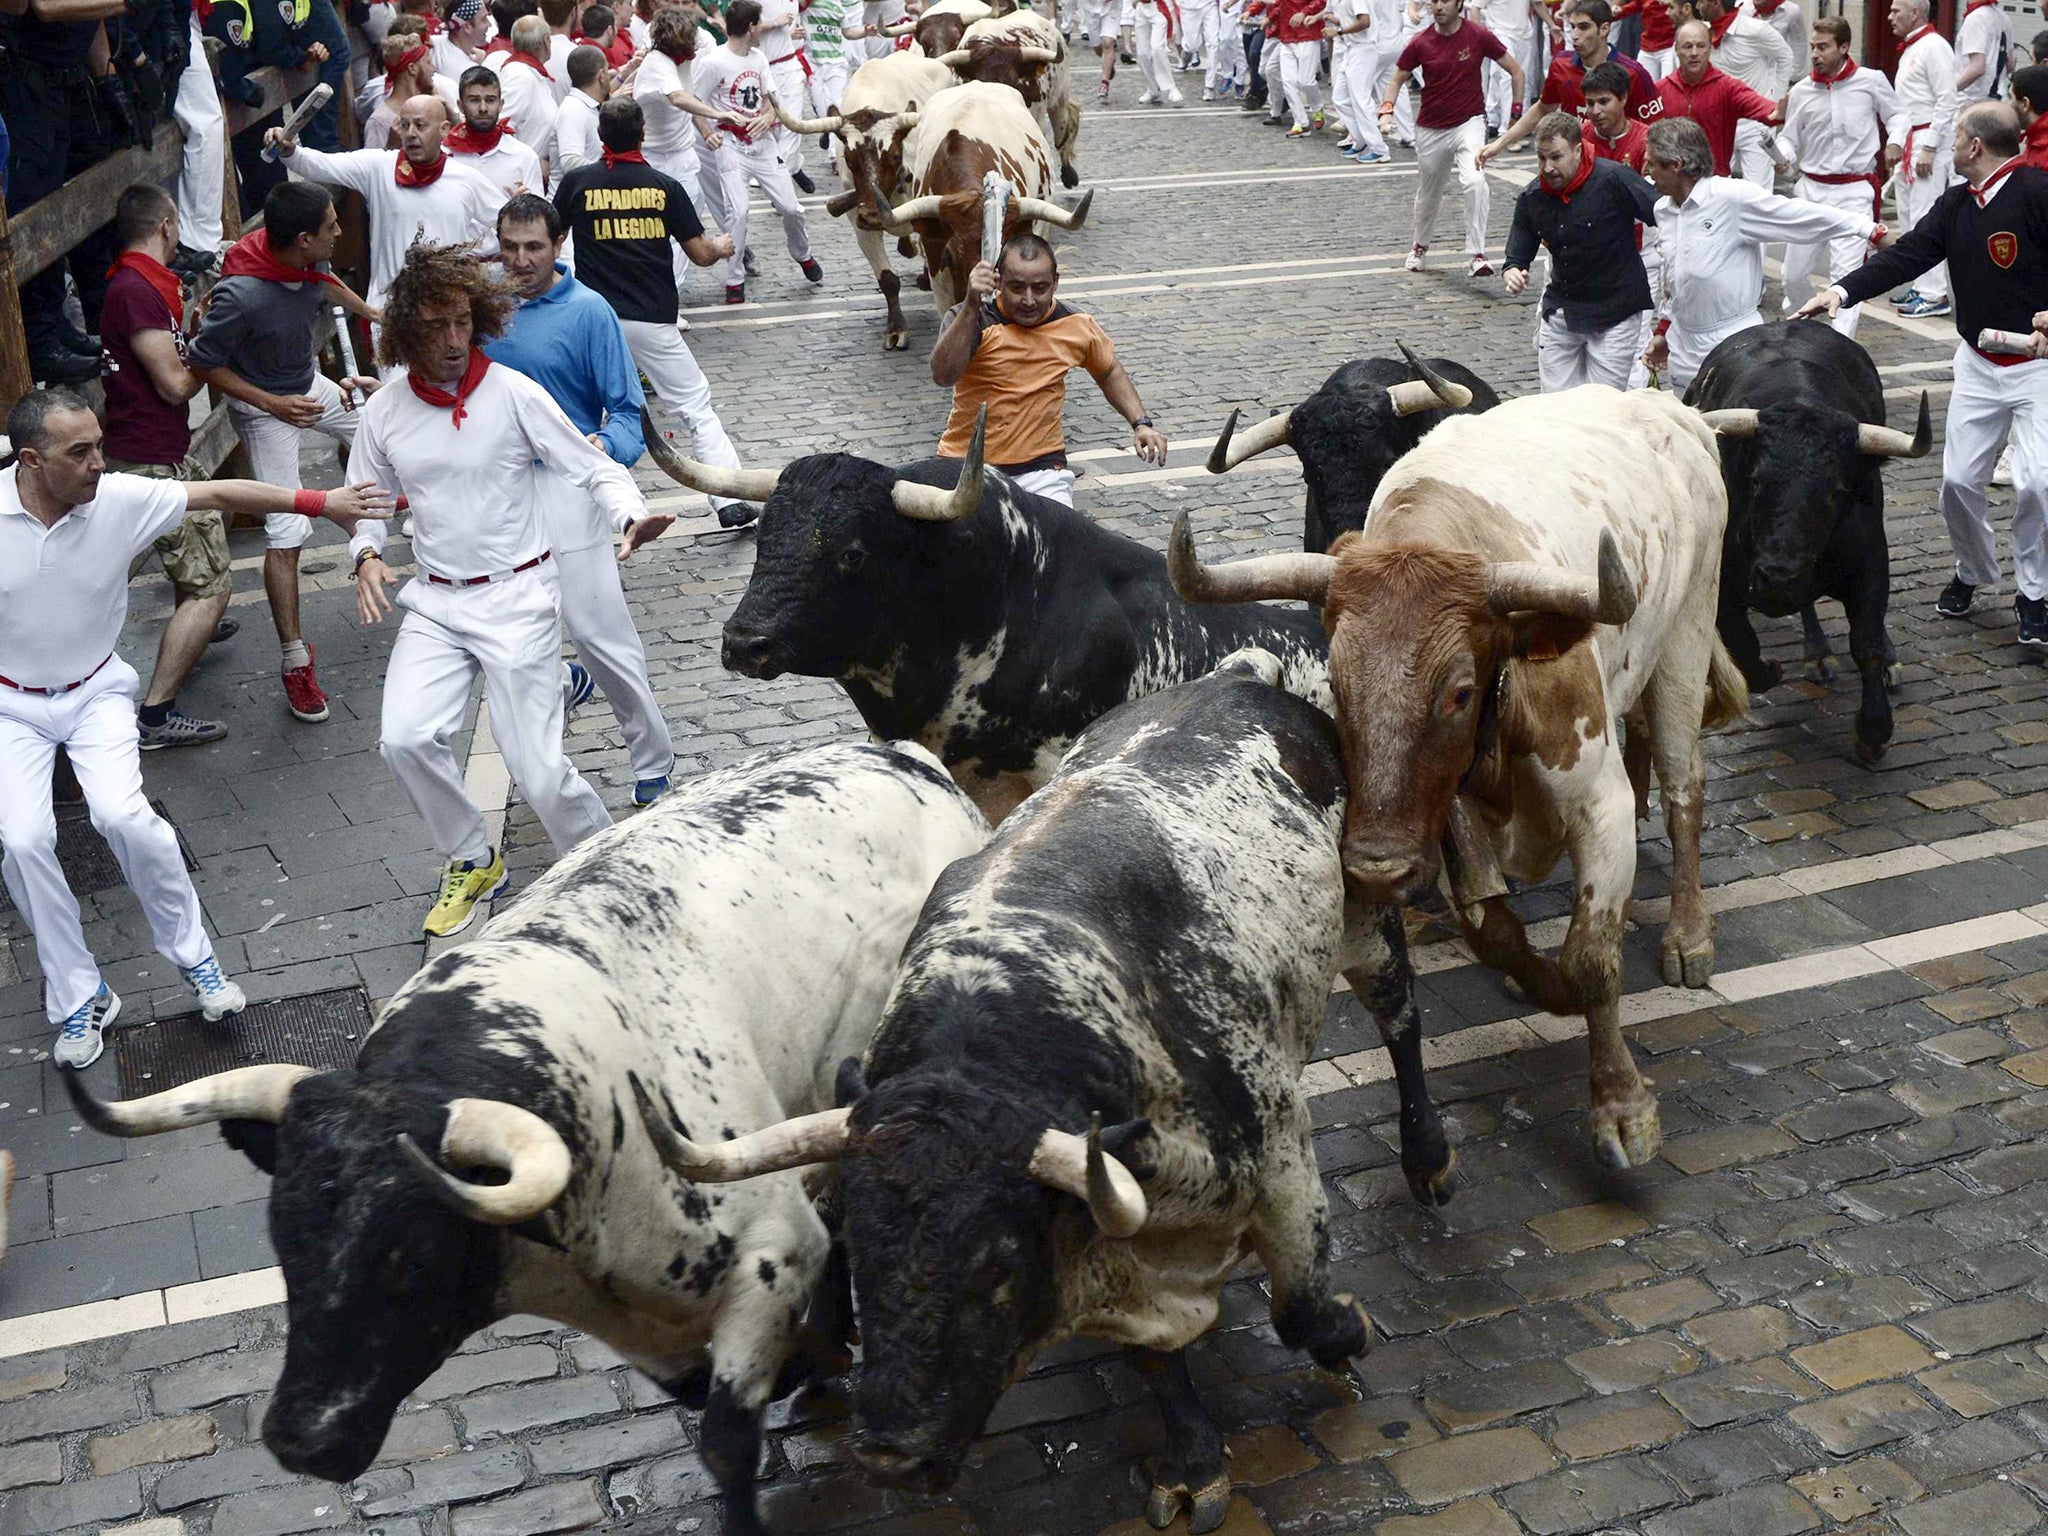 Runners sprint alongside Torrestrella fighting bulls at the Estafeta corner during the first running of the bulls of the San Fermin festival in Pamplona